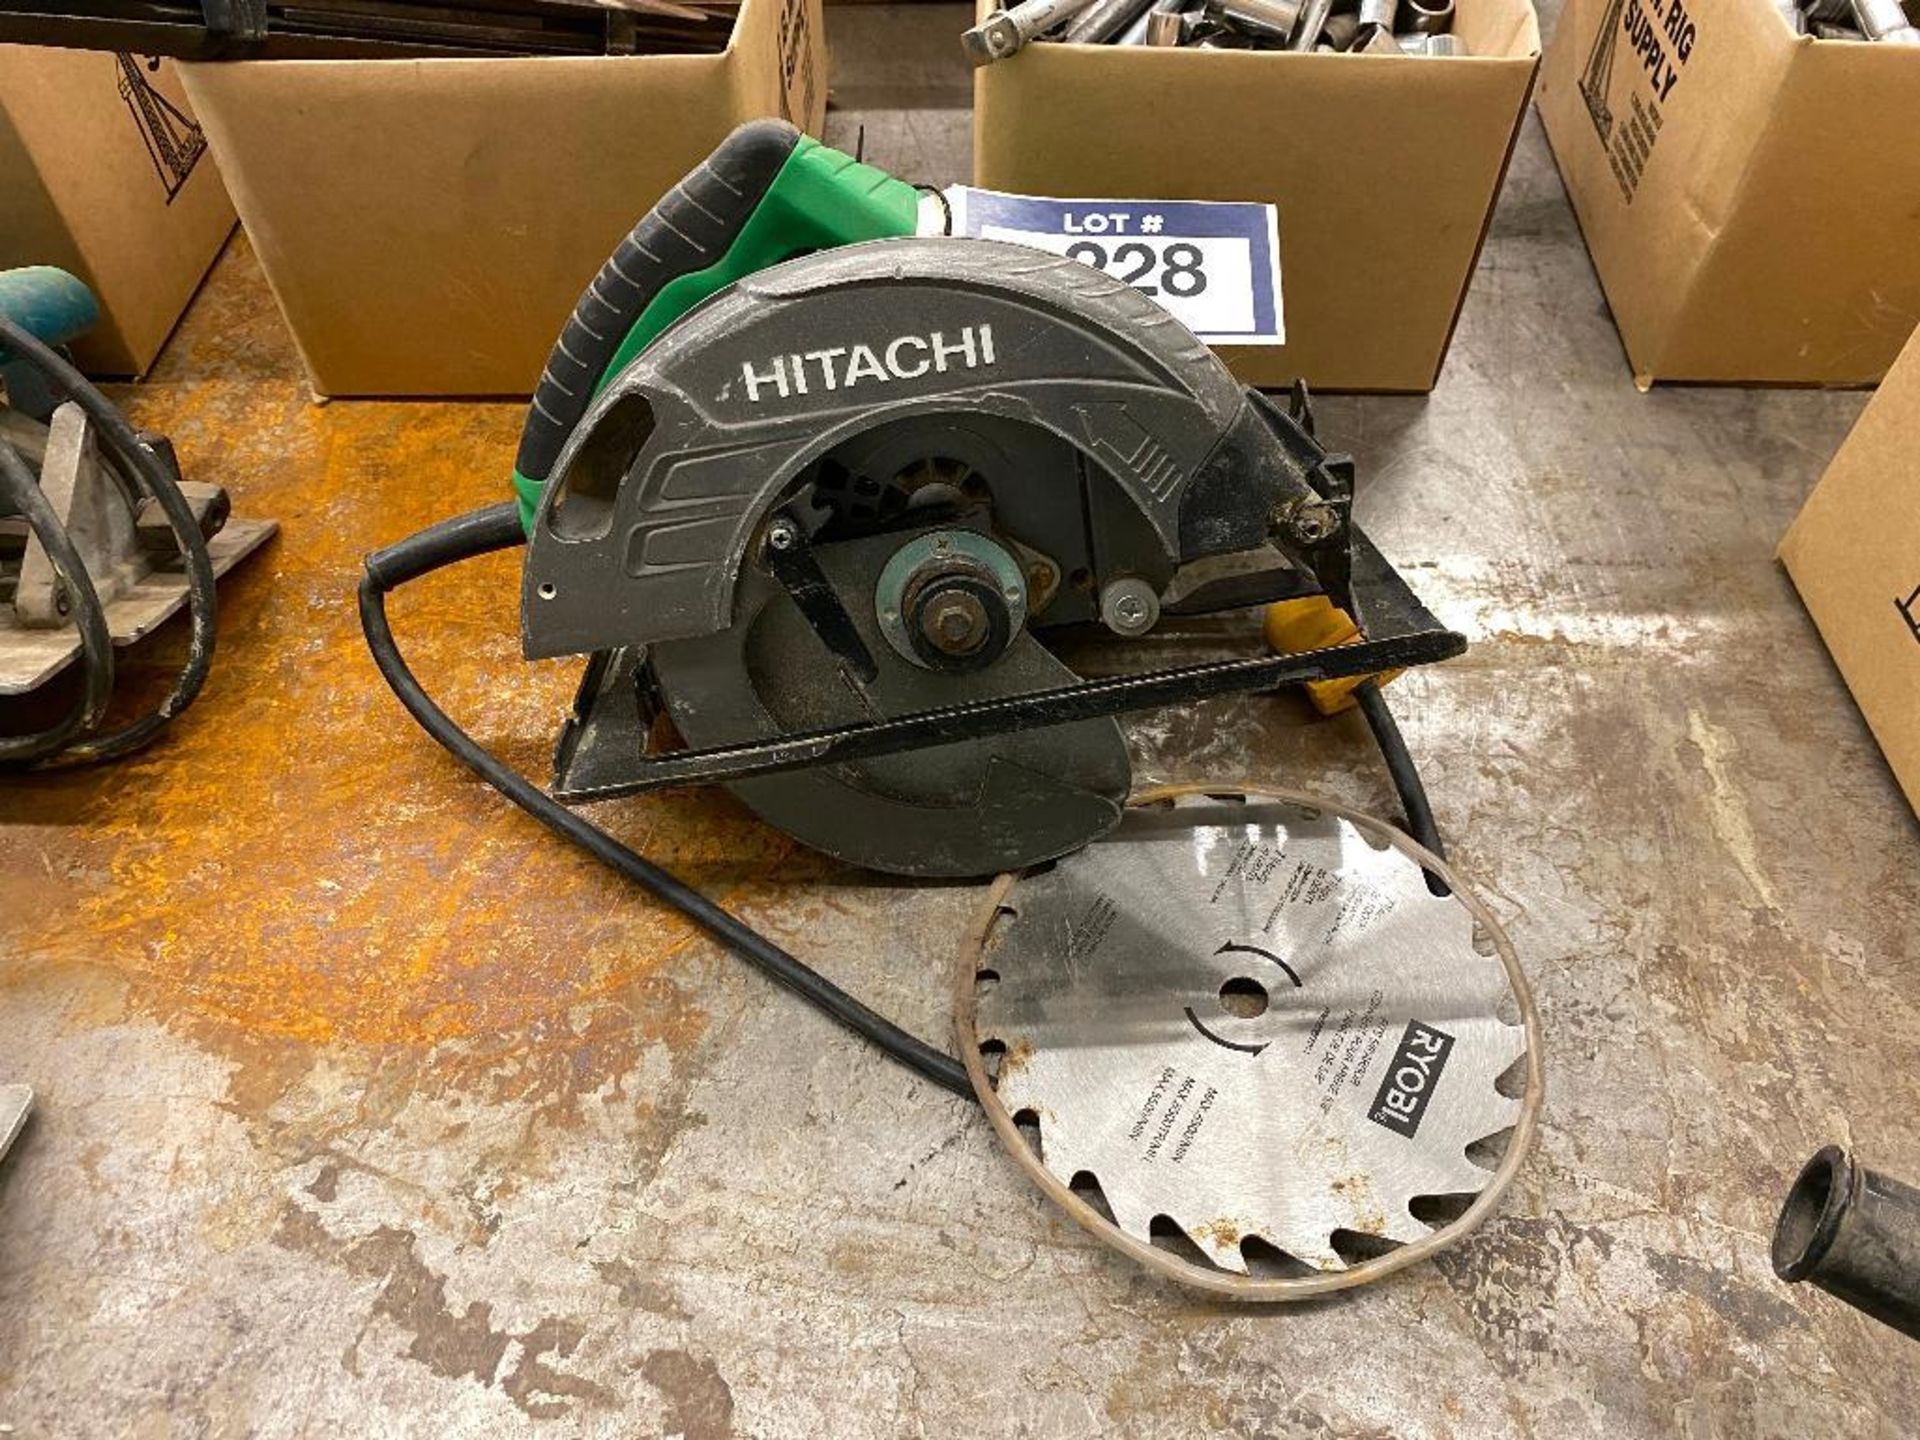 Hitachi C7ST 7 1/4" Circular Saw.